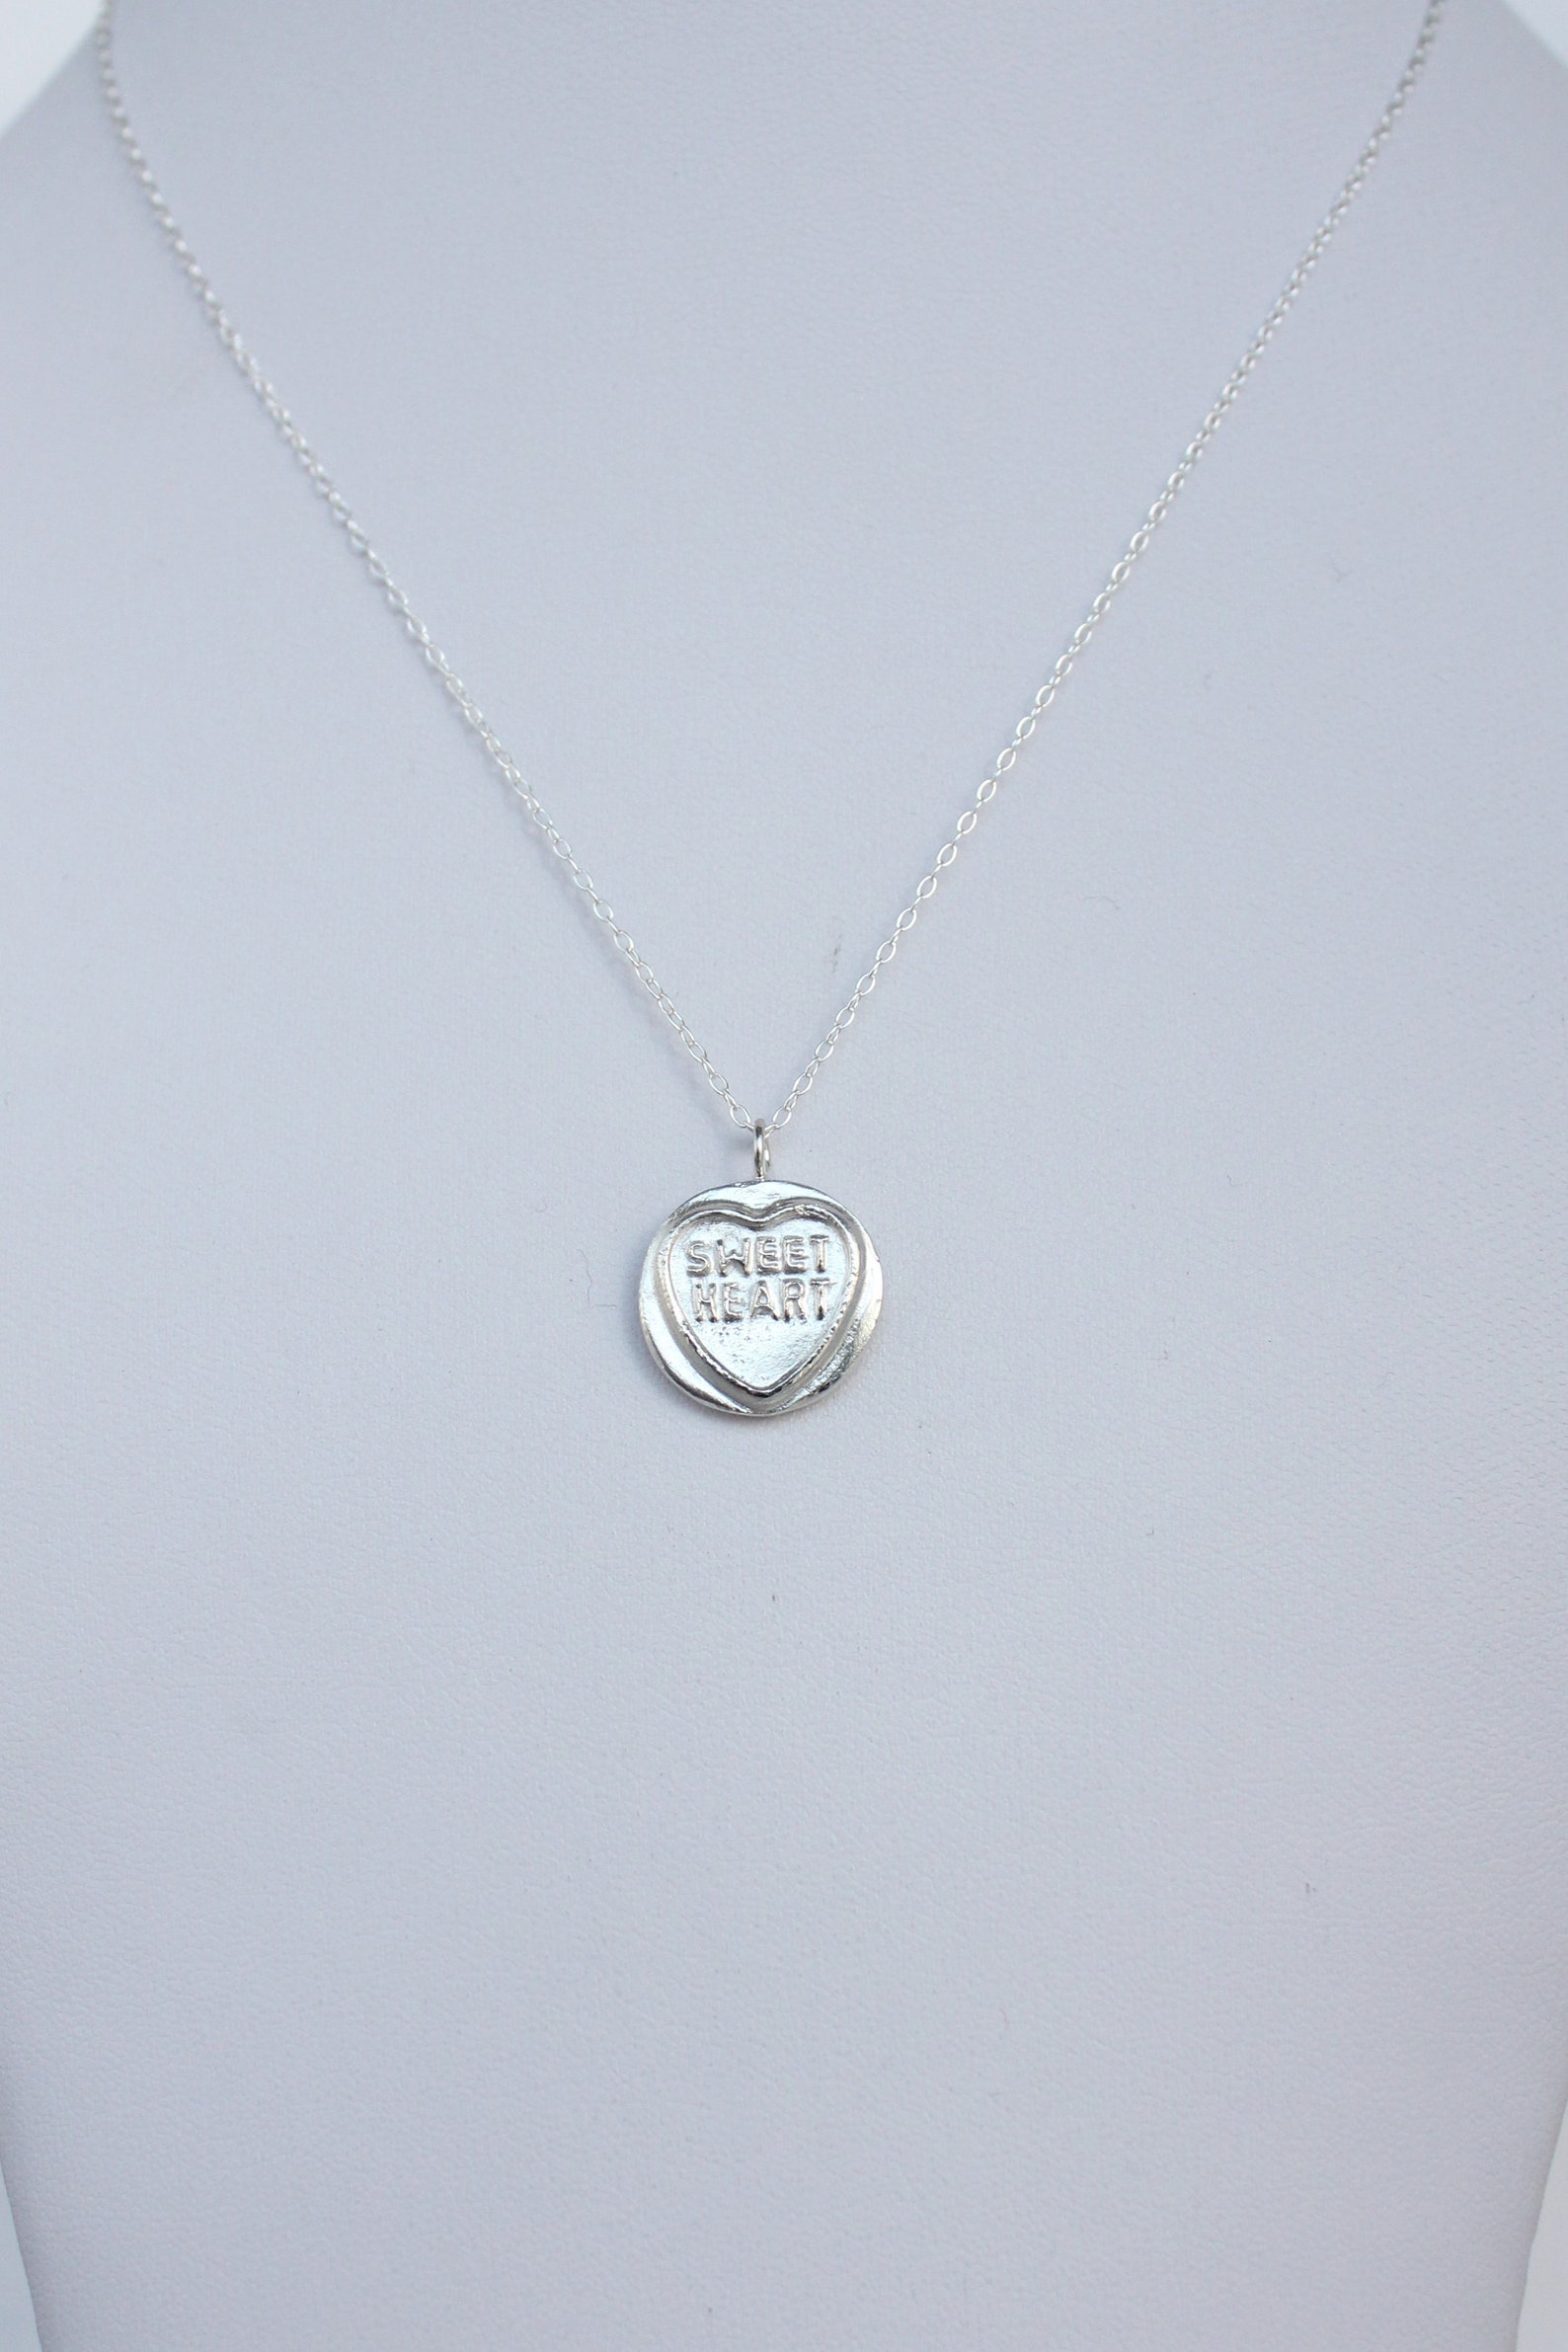 Sweet heart necklace sweethearts silver sweet heart silver | Etsy